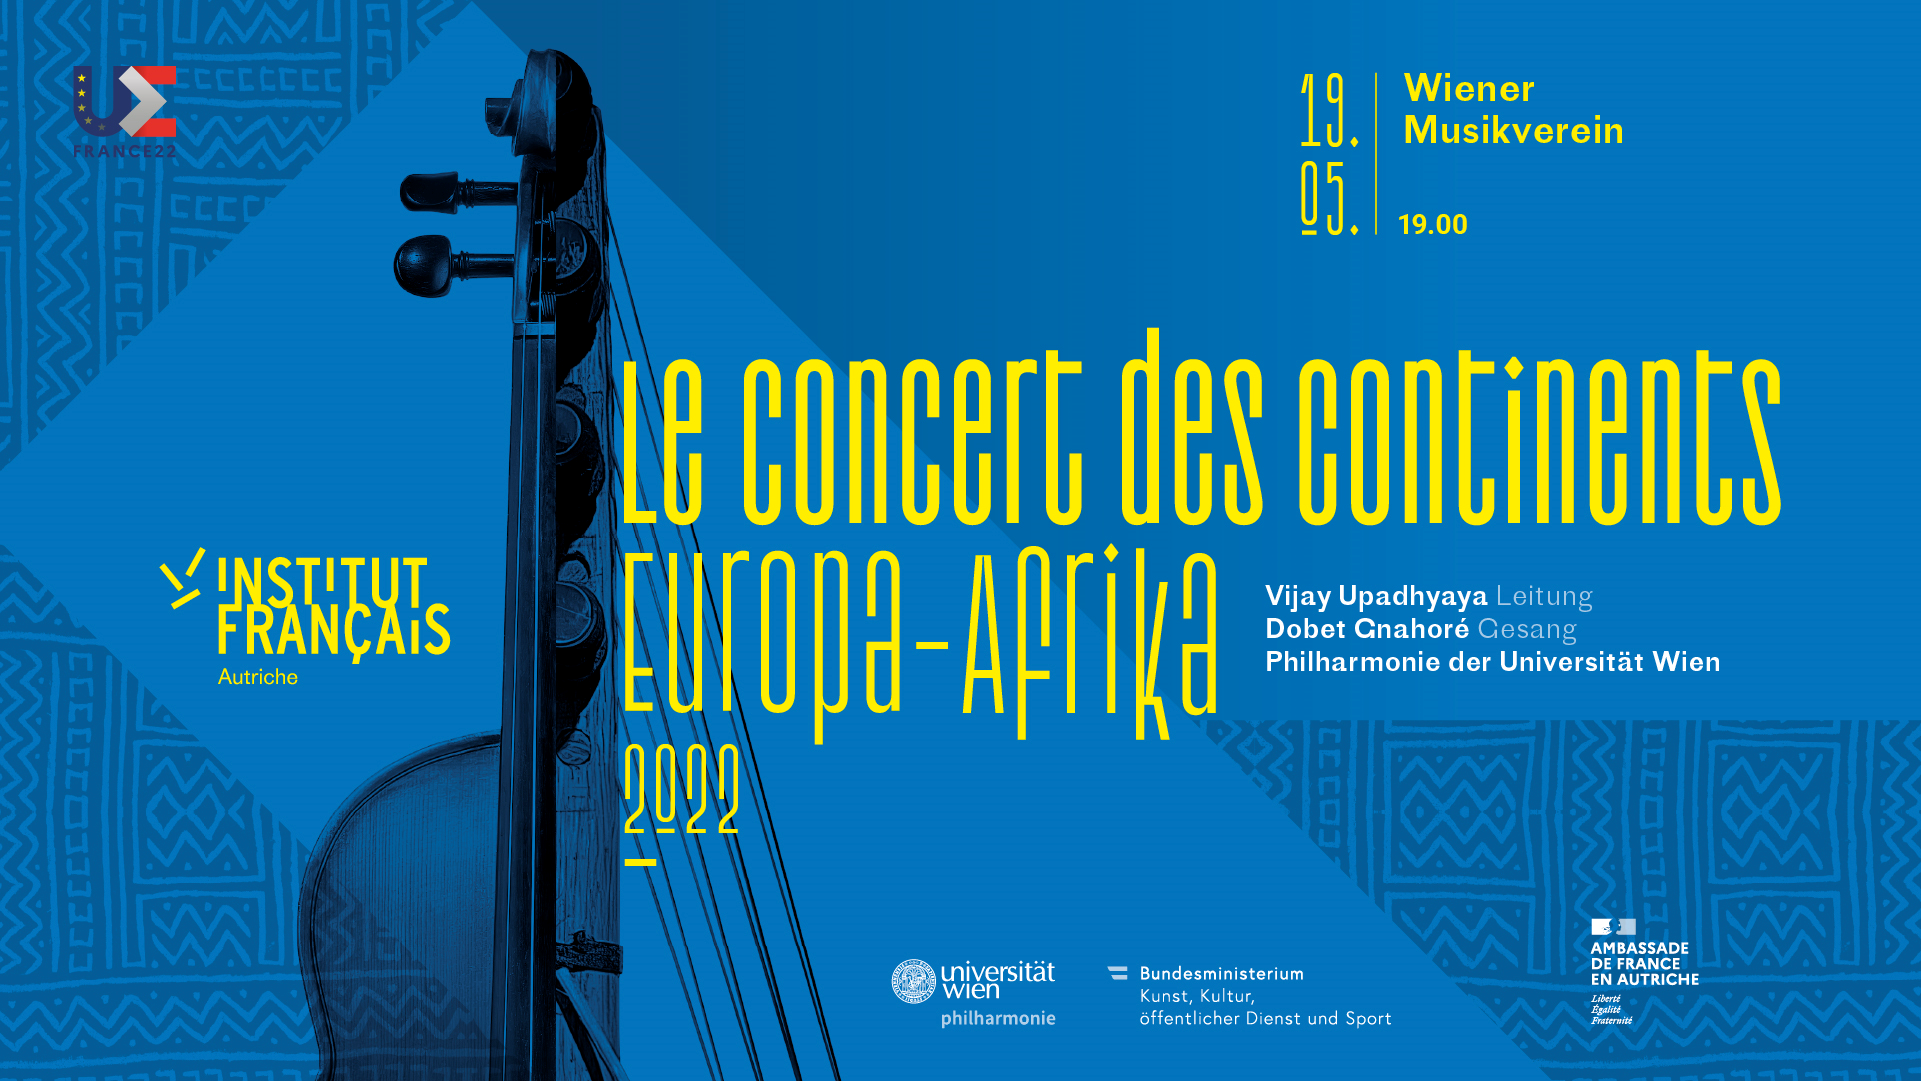 Concert des Continents, Europa-Afrika 2022